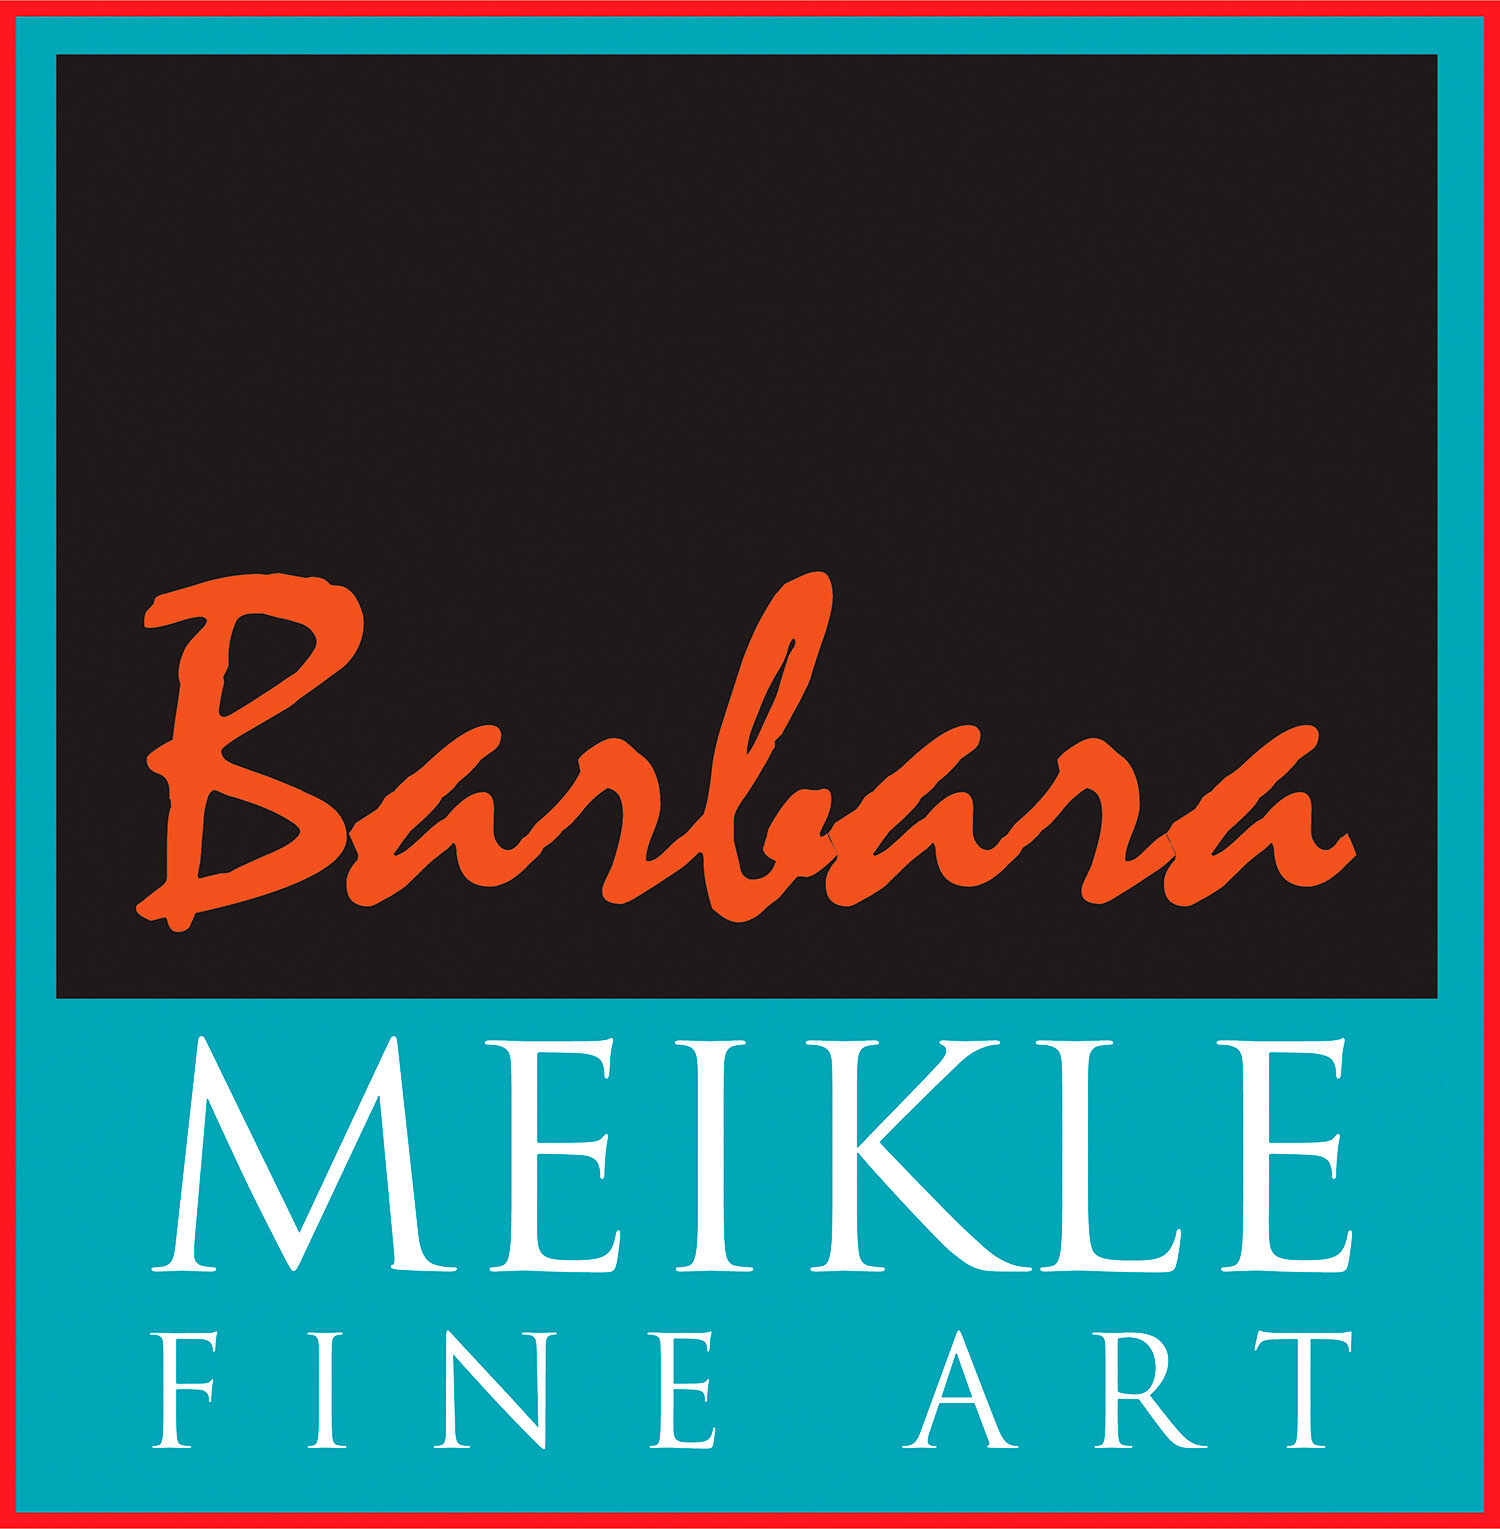 Barbara Meikle Fine Art